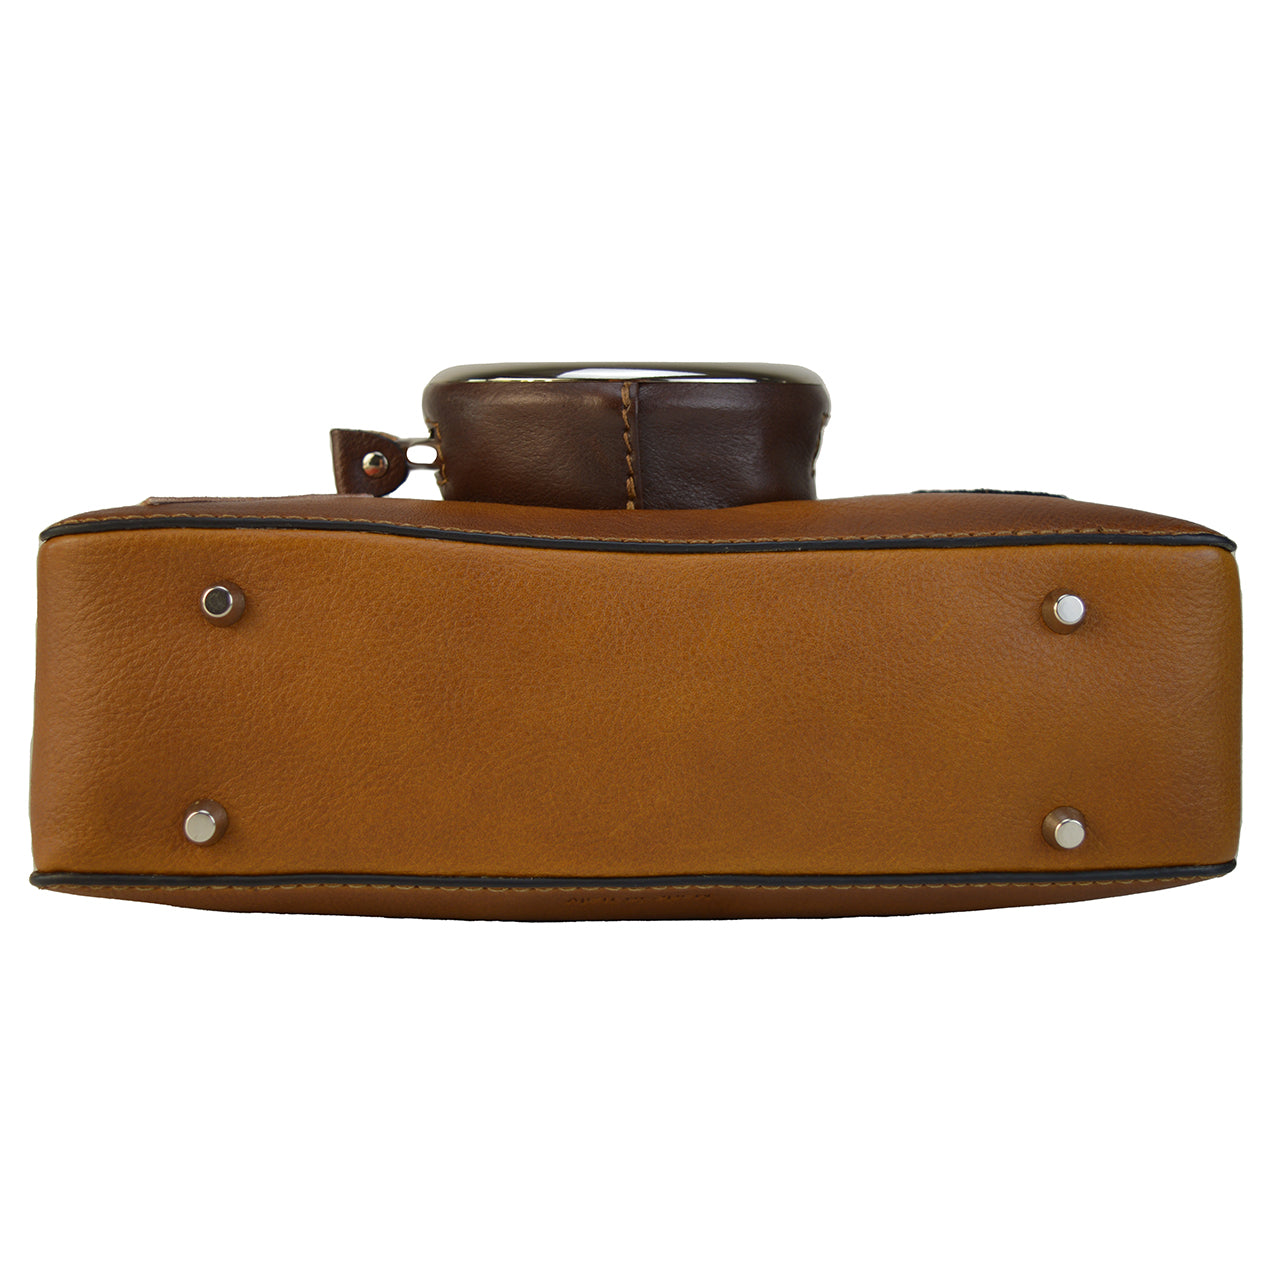 Pratesi Photocamera Bruce Bag in genuine Italian leather